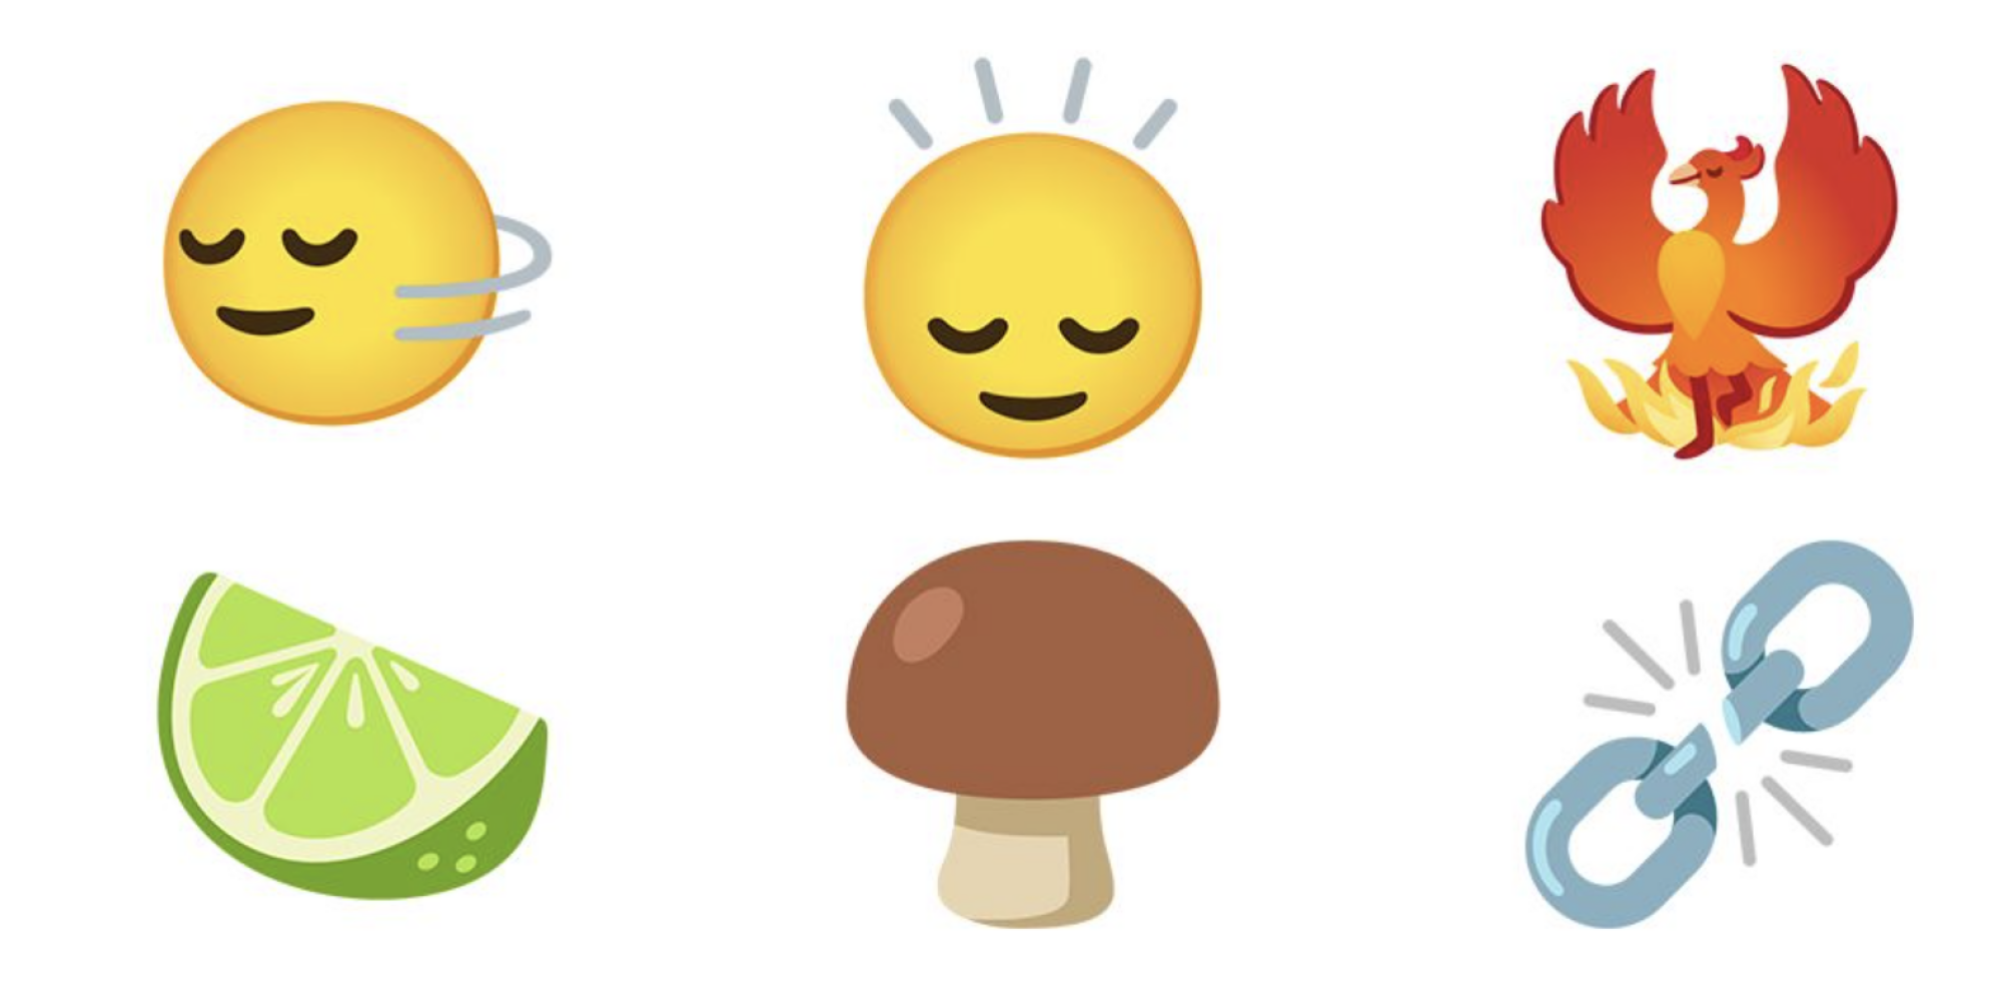 Six emoji icons. From L to R: Shaking head side to side, nodding, firebird, lime, brown mushroom, broken chain